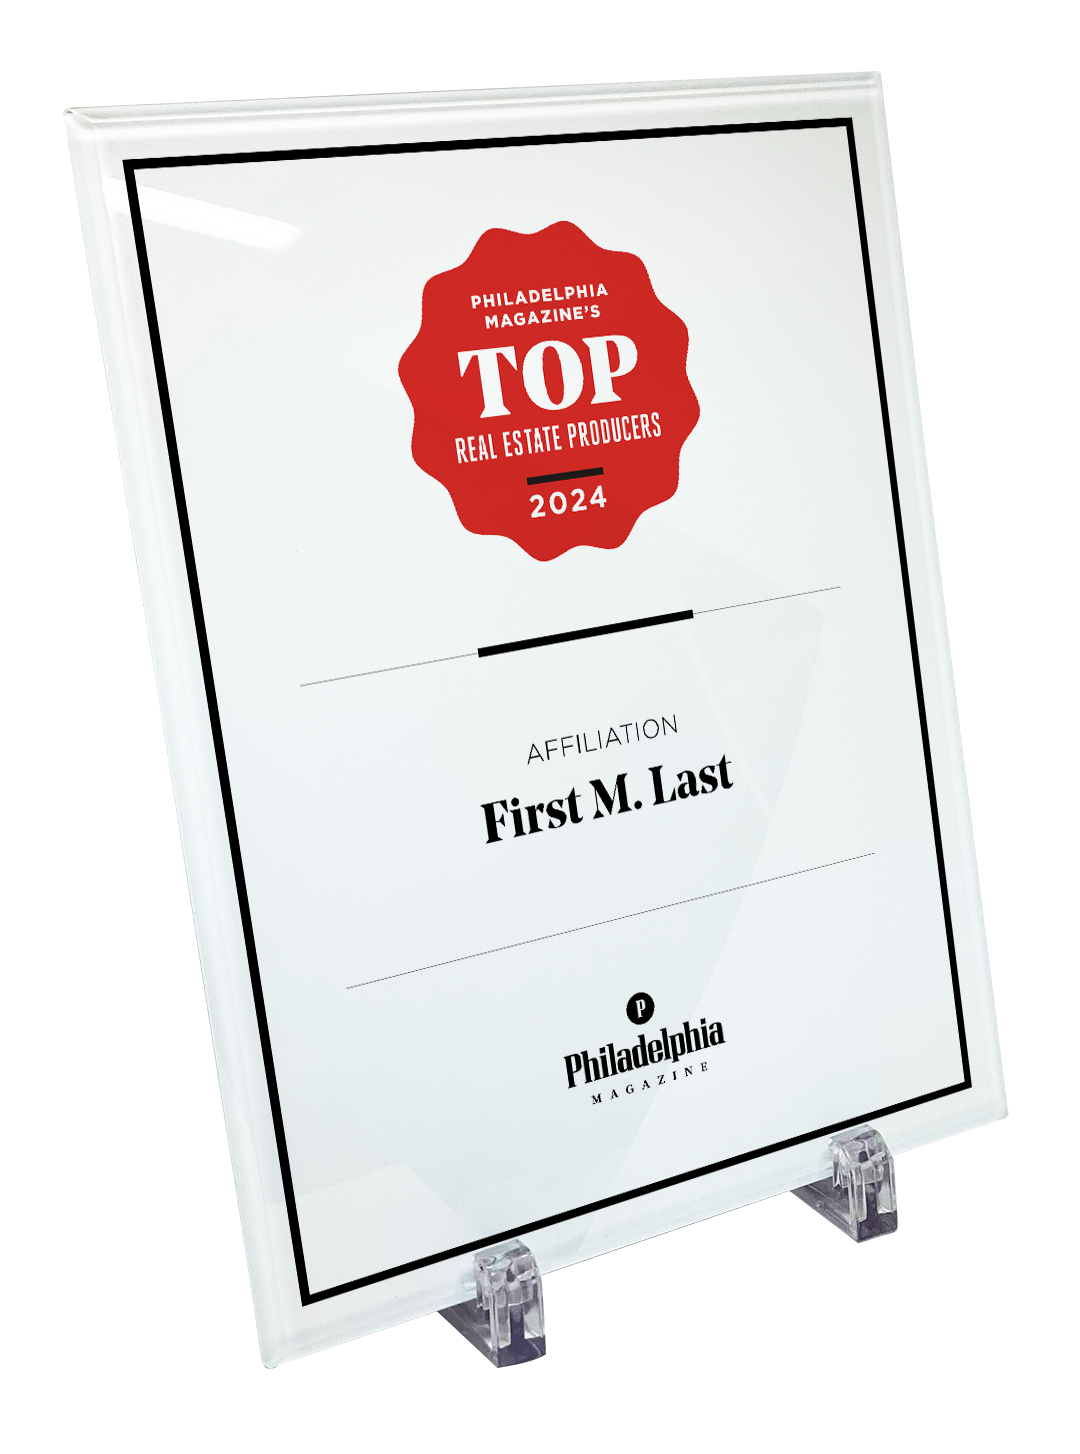 Philadelphia magazine Top Real Estate Producers Award - Glass